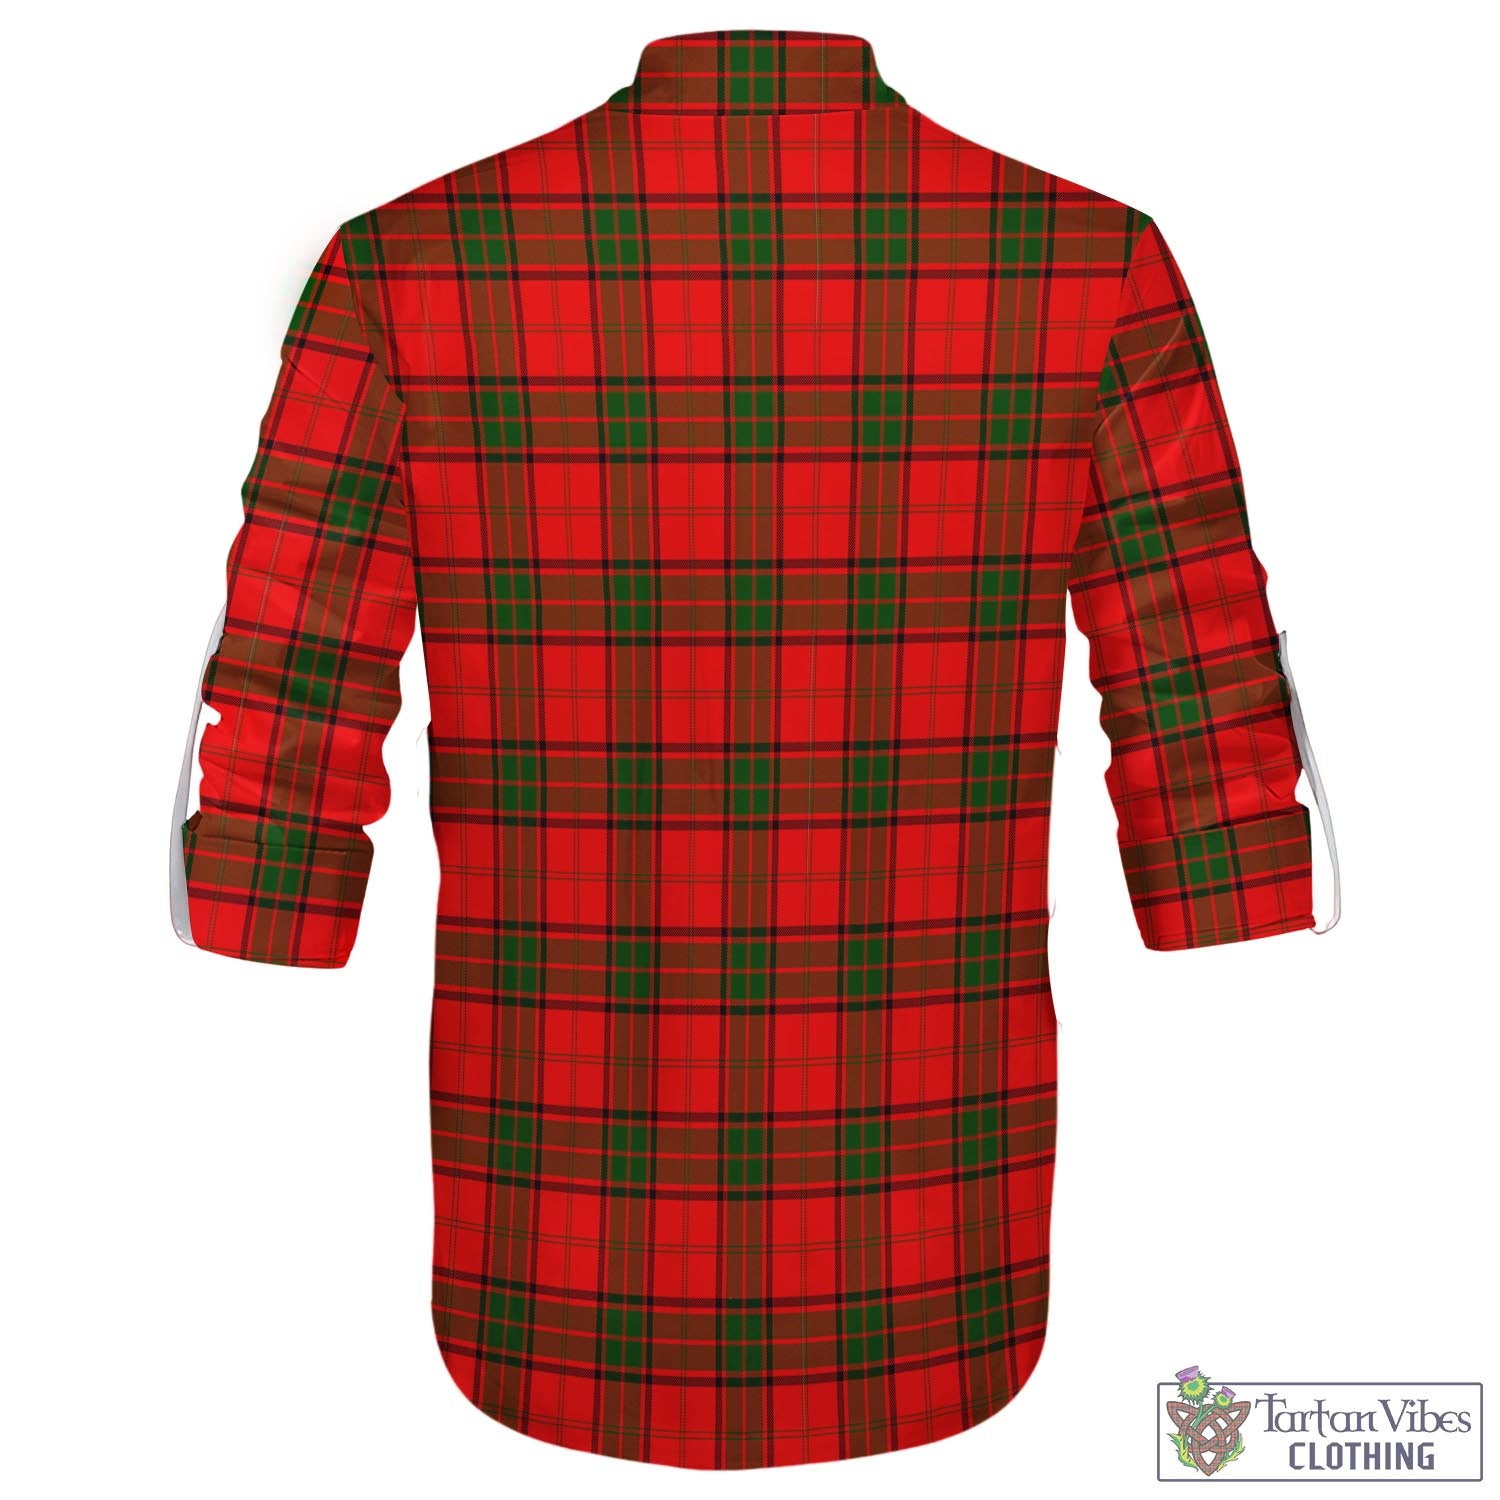 Tartan Vibes Clothing Adair Tartan Men's Scottish Traditional Jacobite Ghillie Kilt Shirt with Family Crest